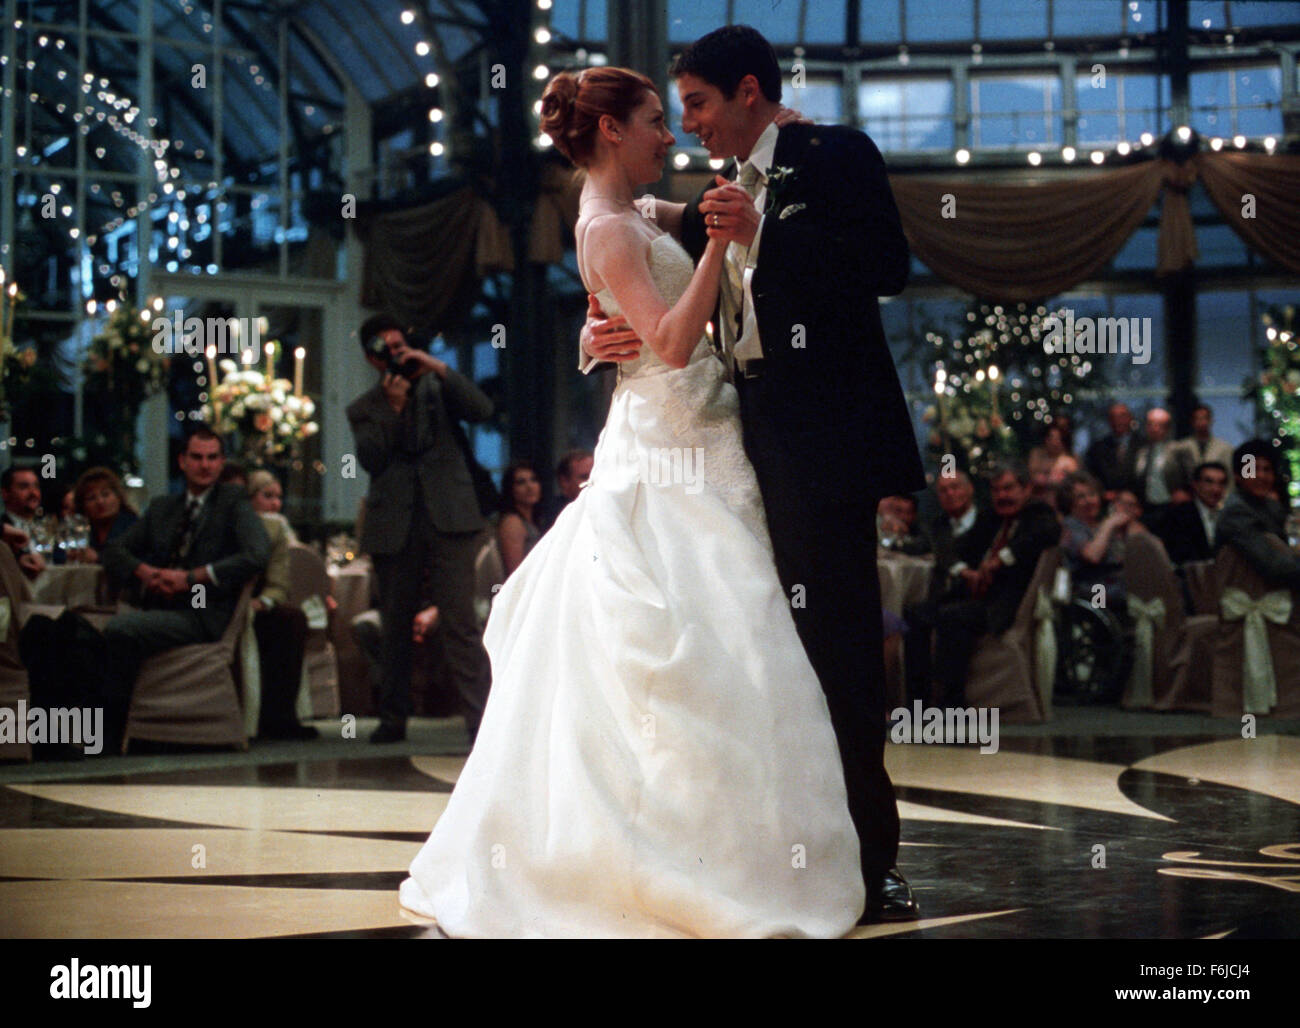 Release Date July 24 2003 Movie Title American Wedding Studio